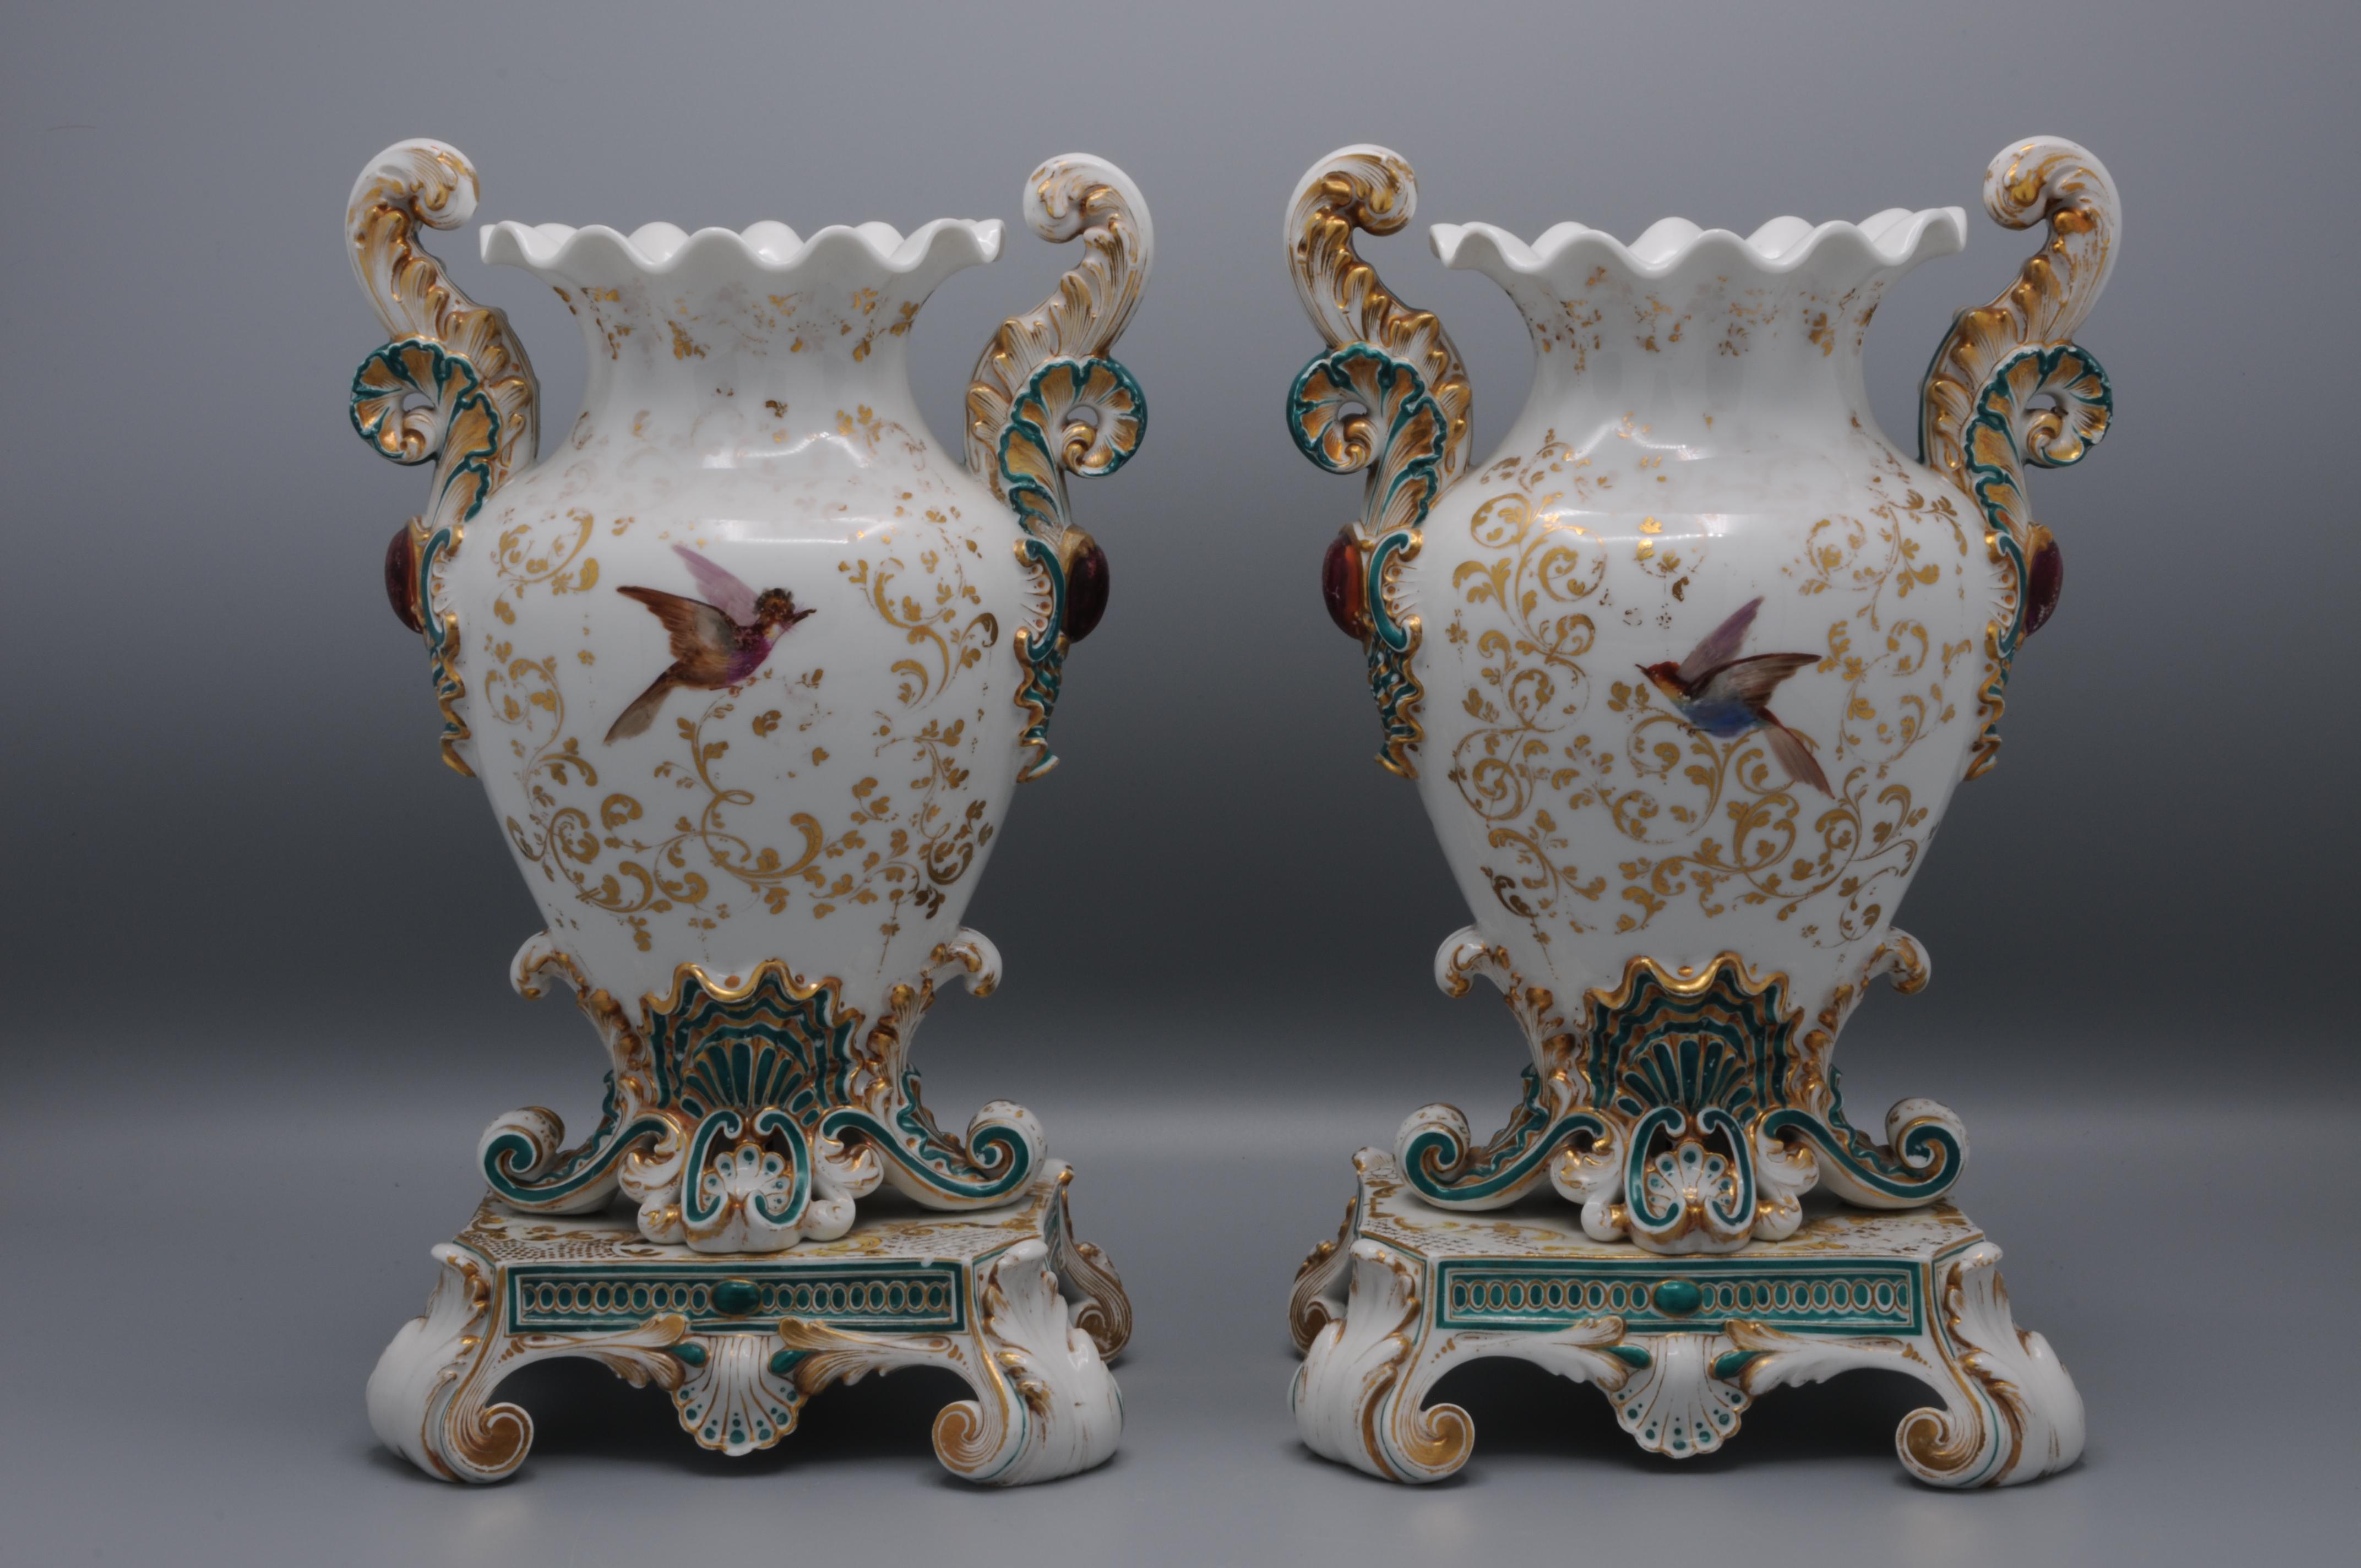 European Jacob Petit (1796-1868) - Pair of Rococo Revival Vases For Sale